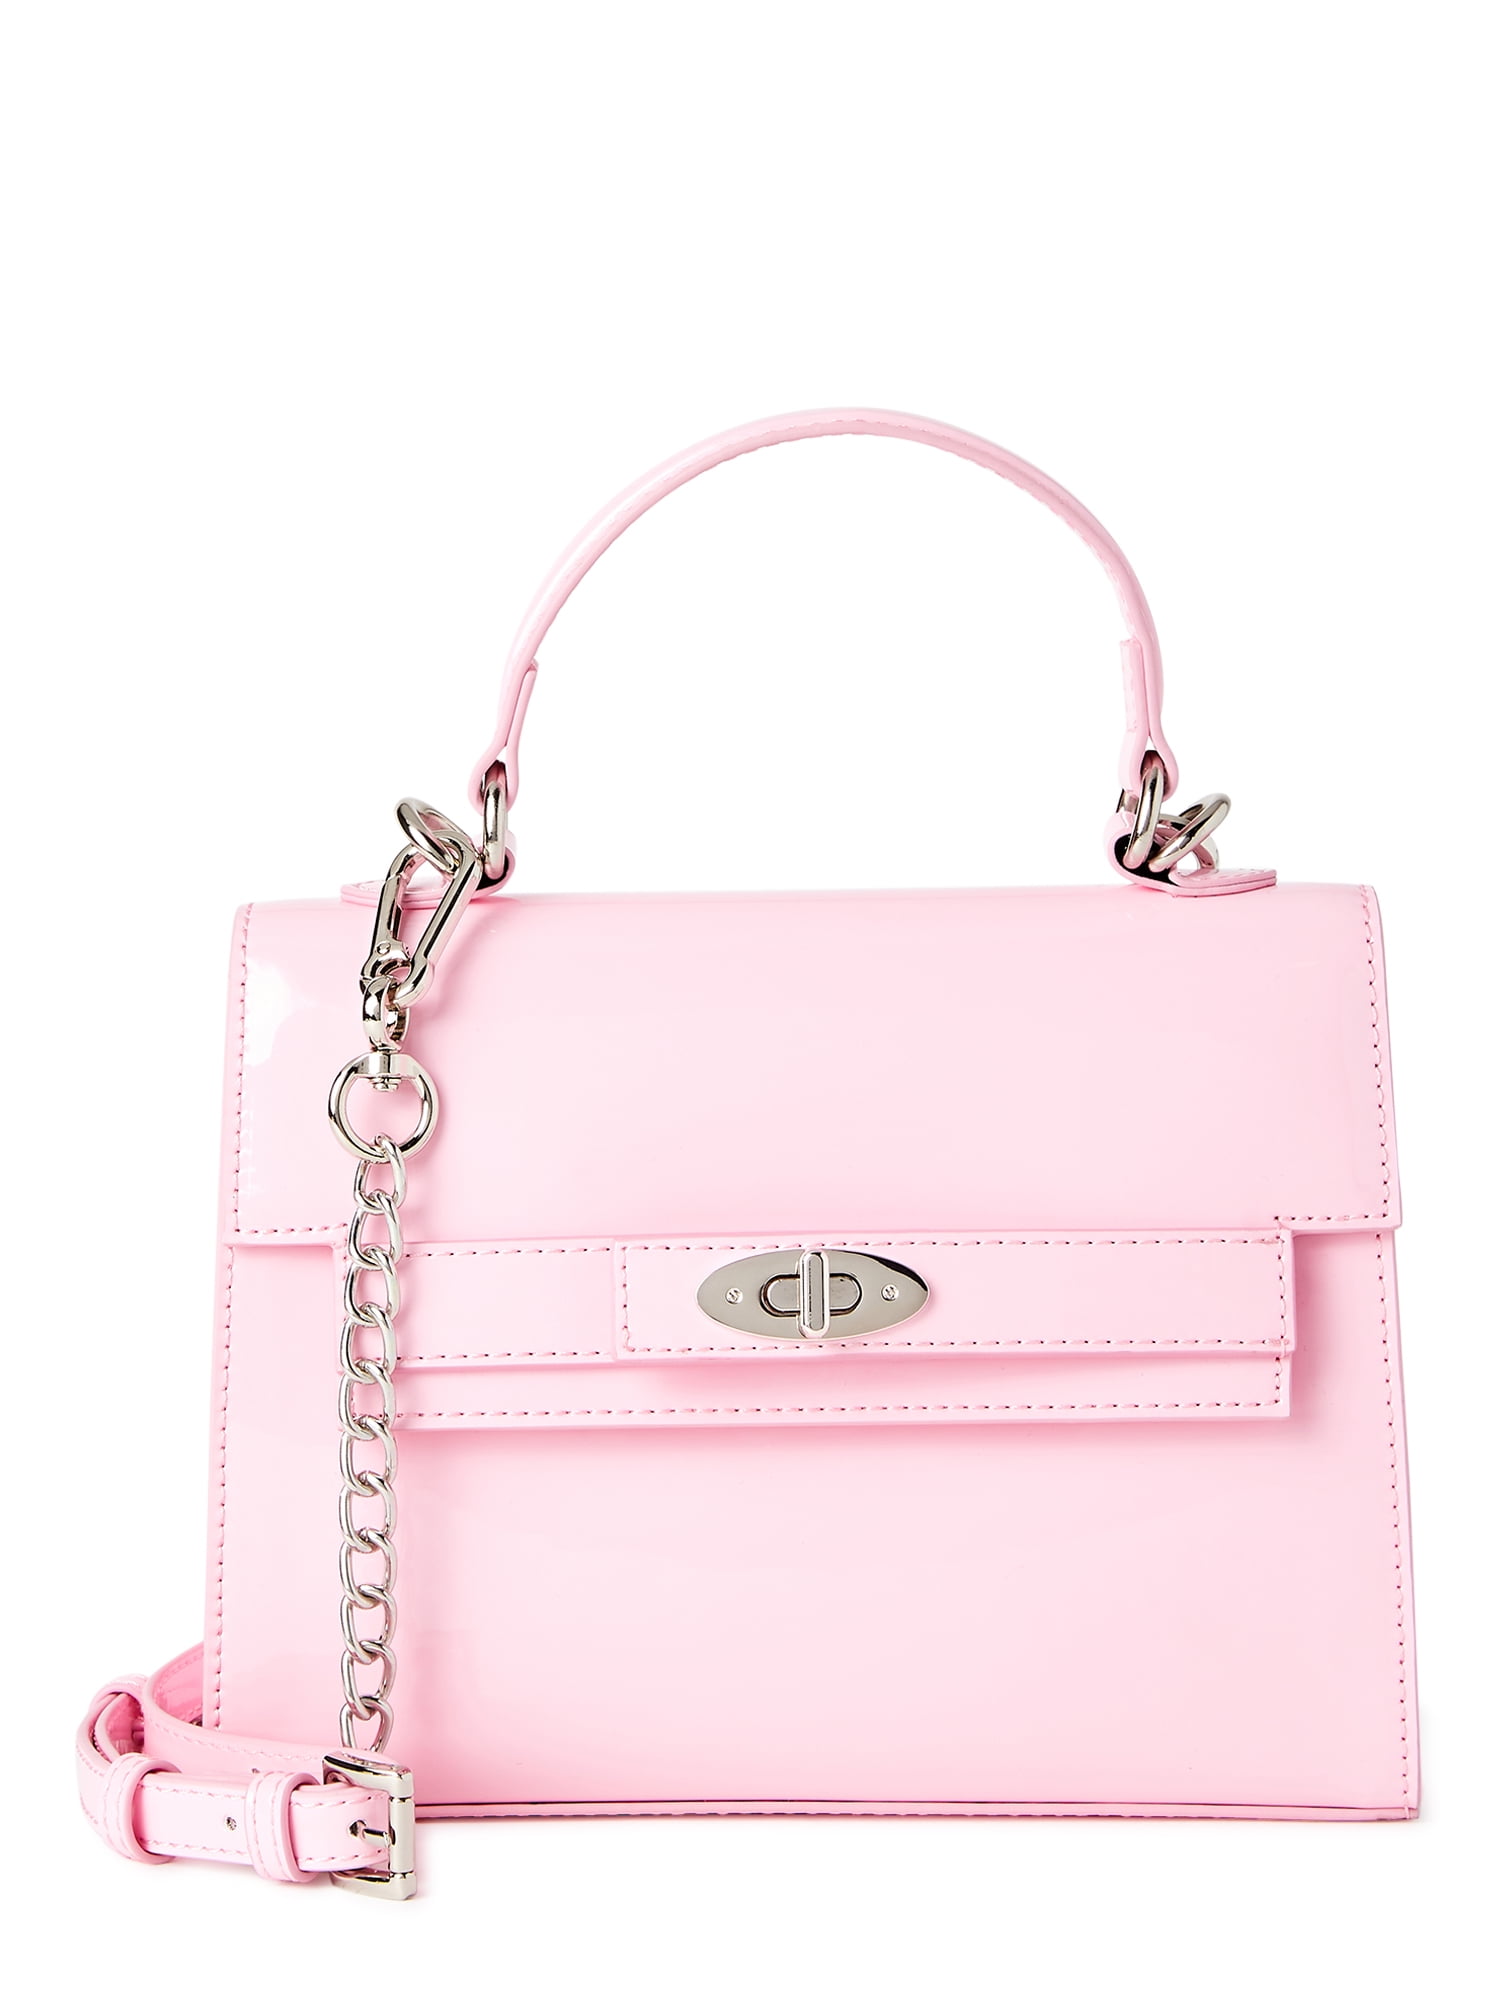 Madden NYC Women's Boxy Top Handle Bag Light Pink - Walmart.com